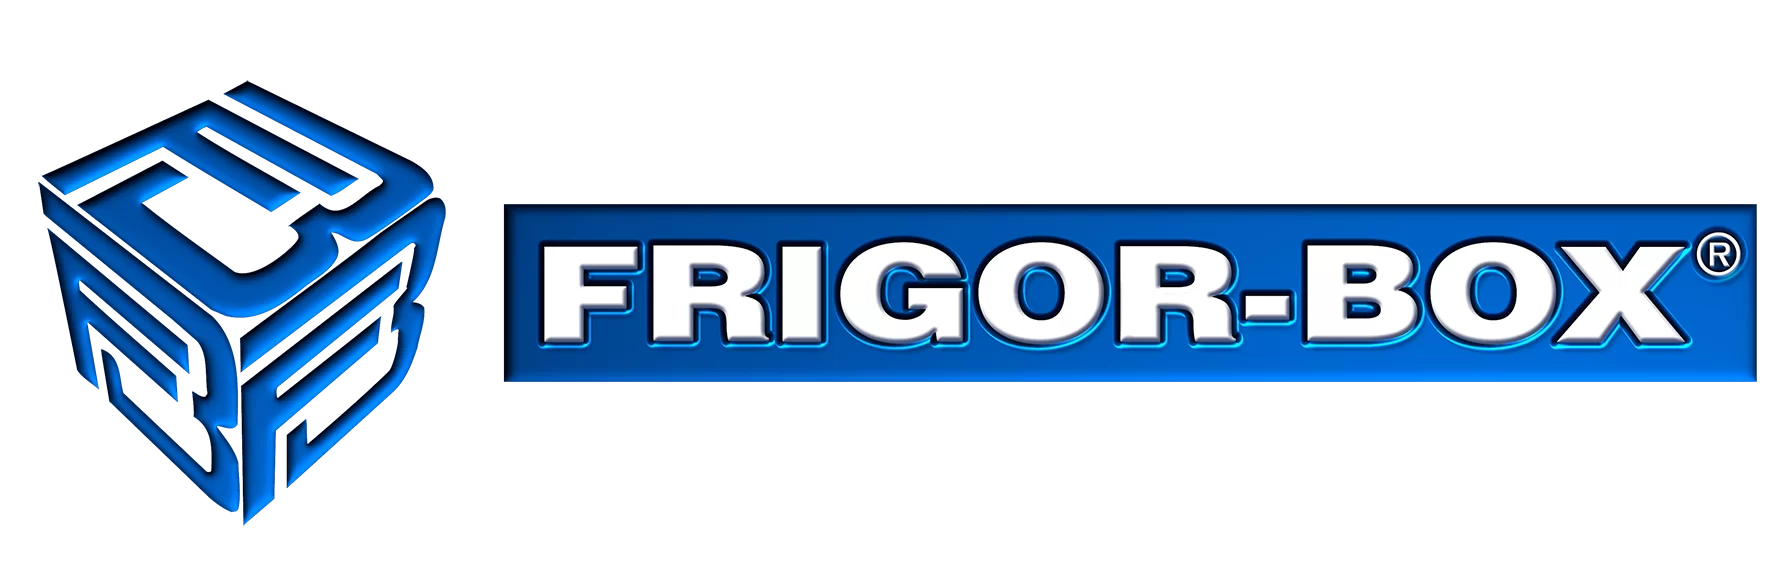 Frigorbox